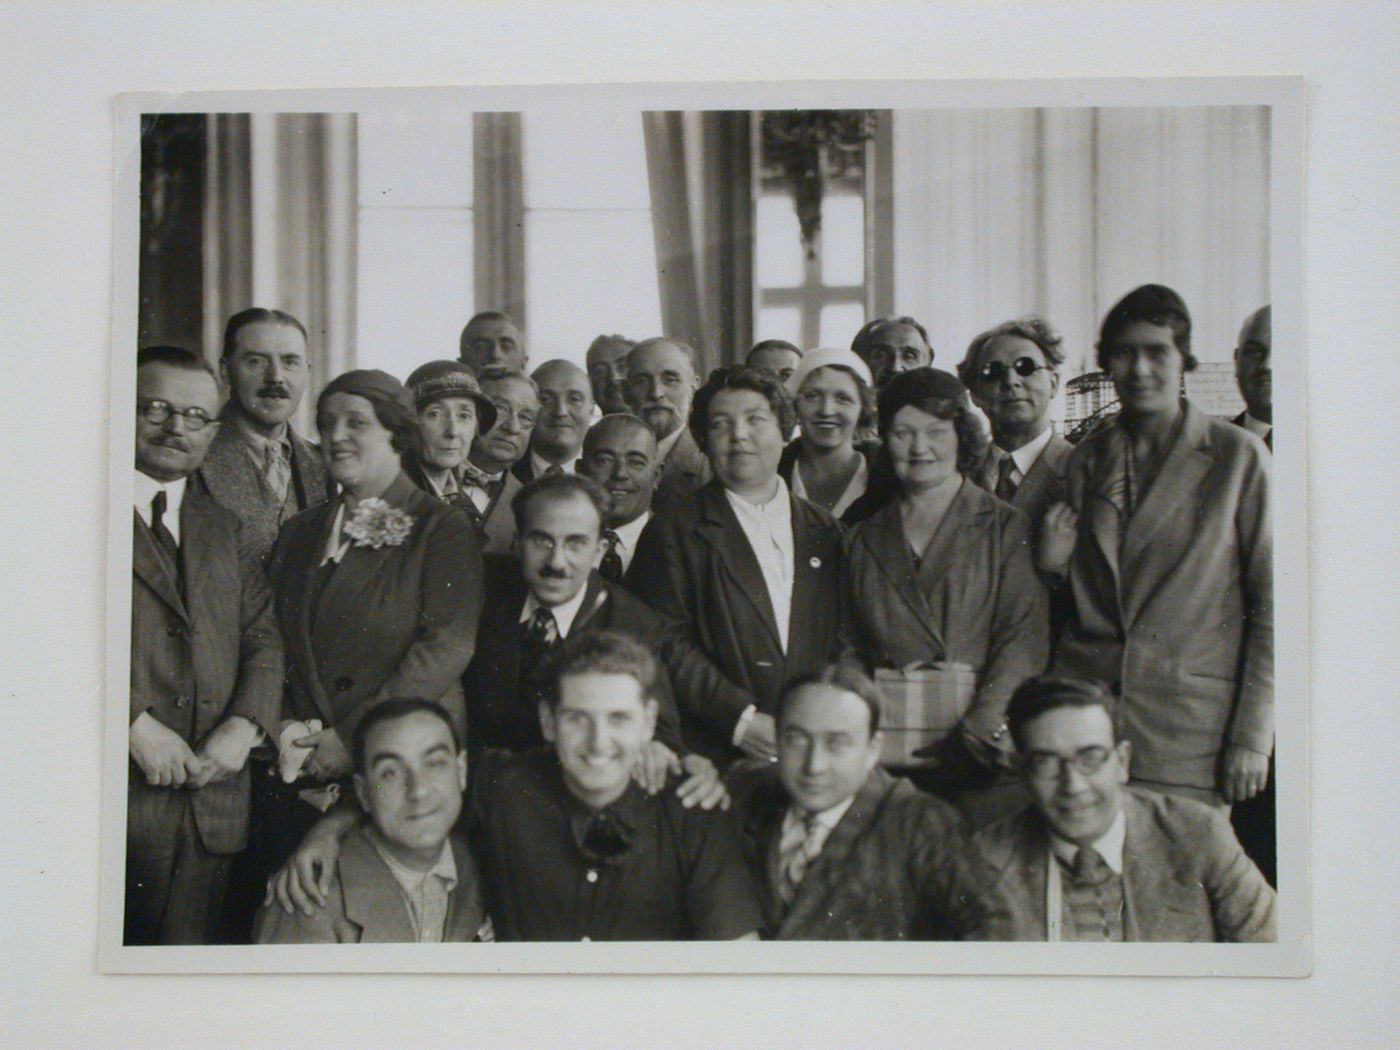 Group portrait of study tour members in the Building Museum, Leningrad (now Saint Petersburg)